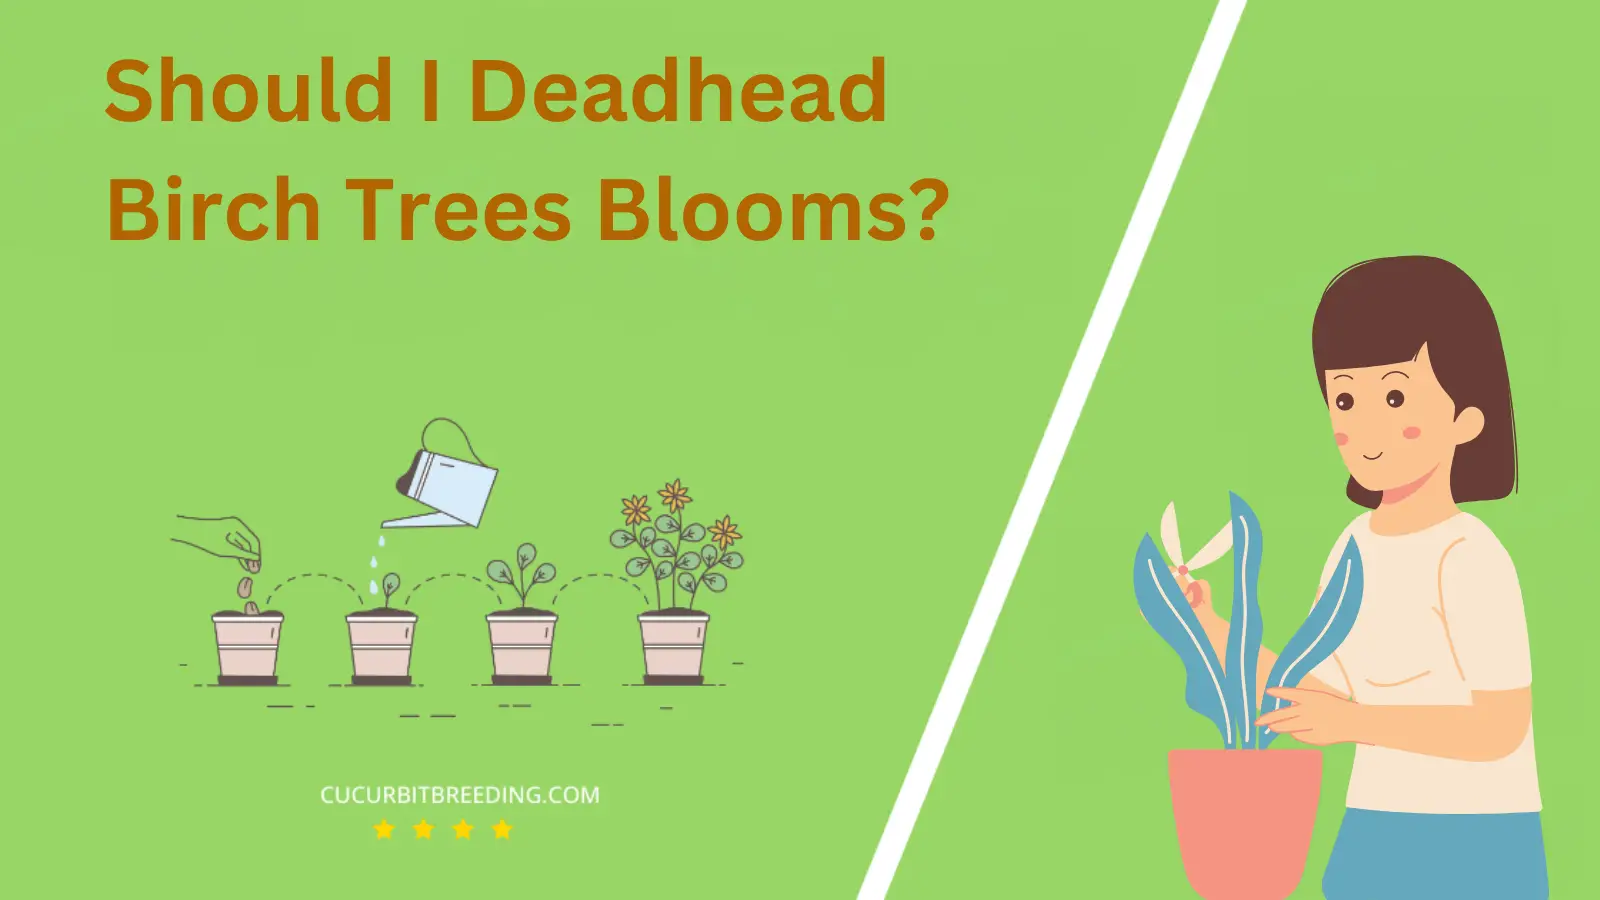 Should I Deadhead Birch Trees Blooms?